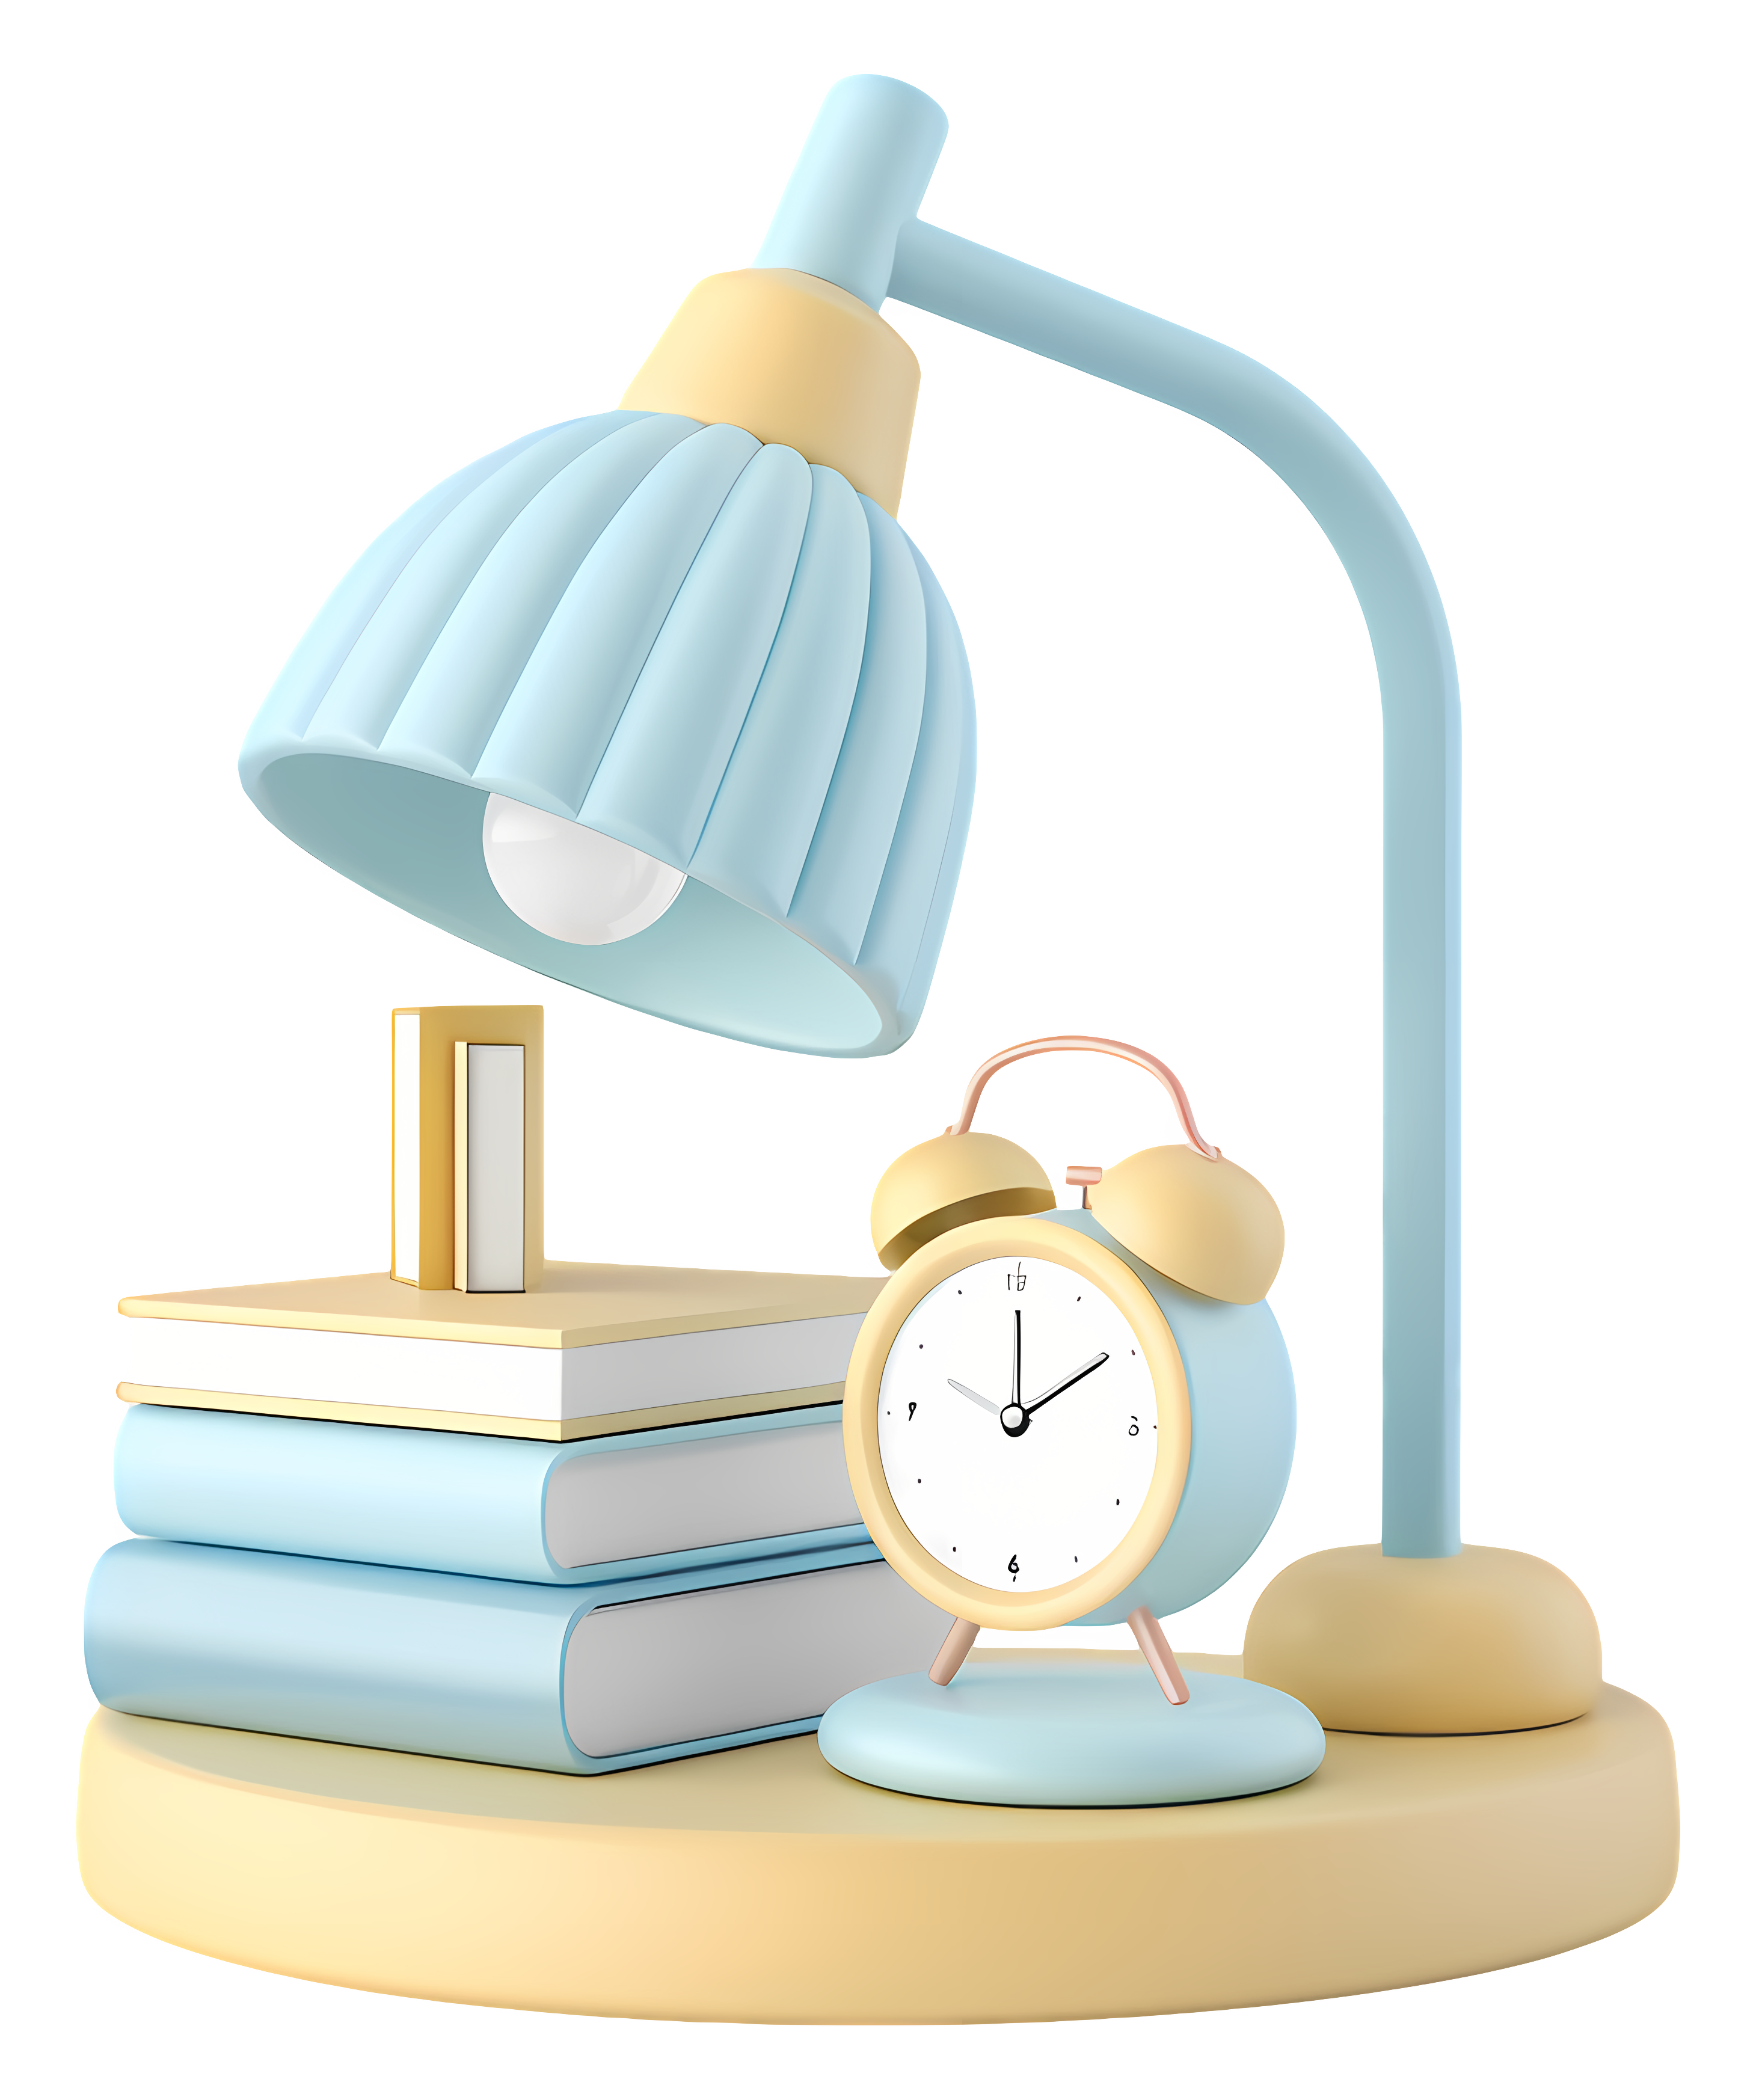 Alarm clock, books, lamp on small desk Clipart